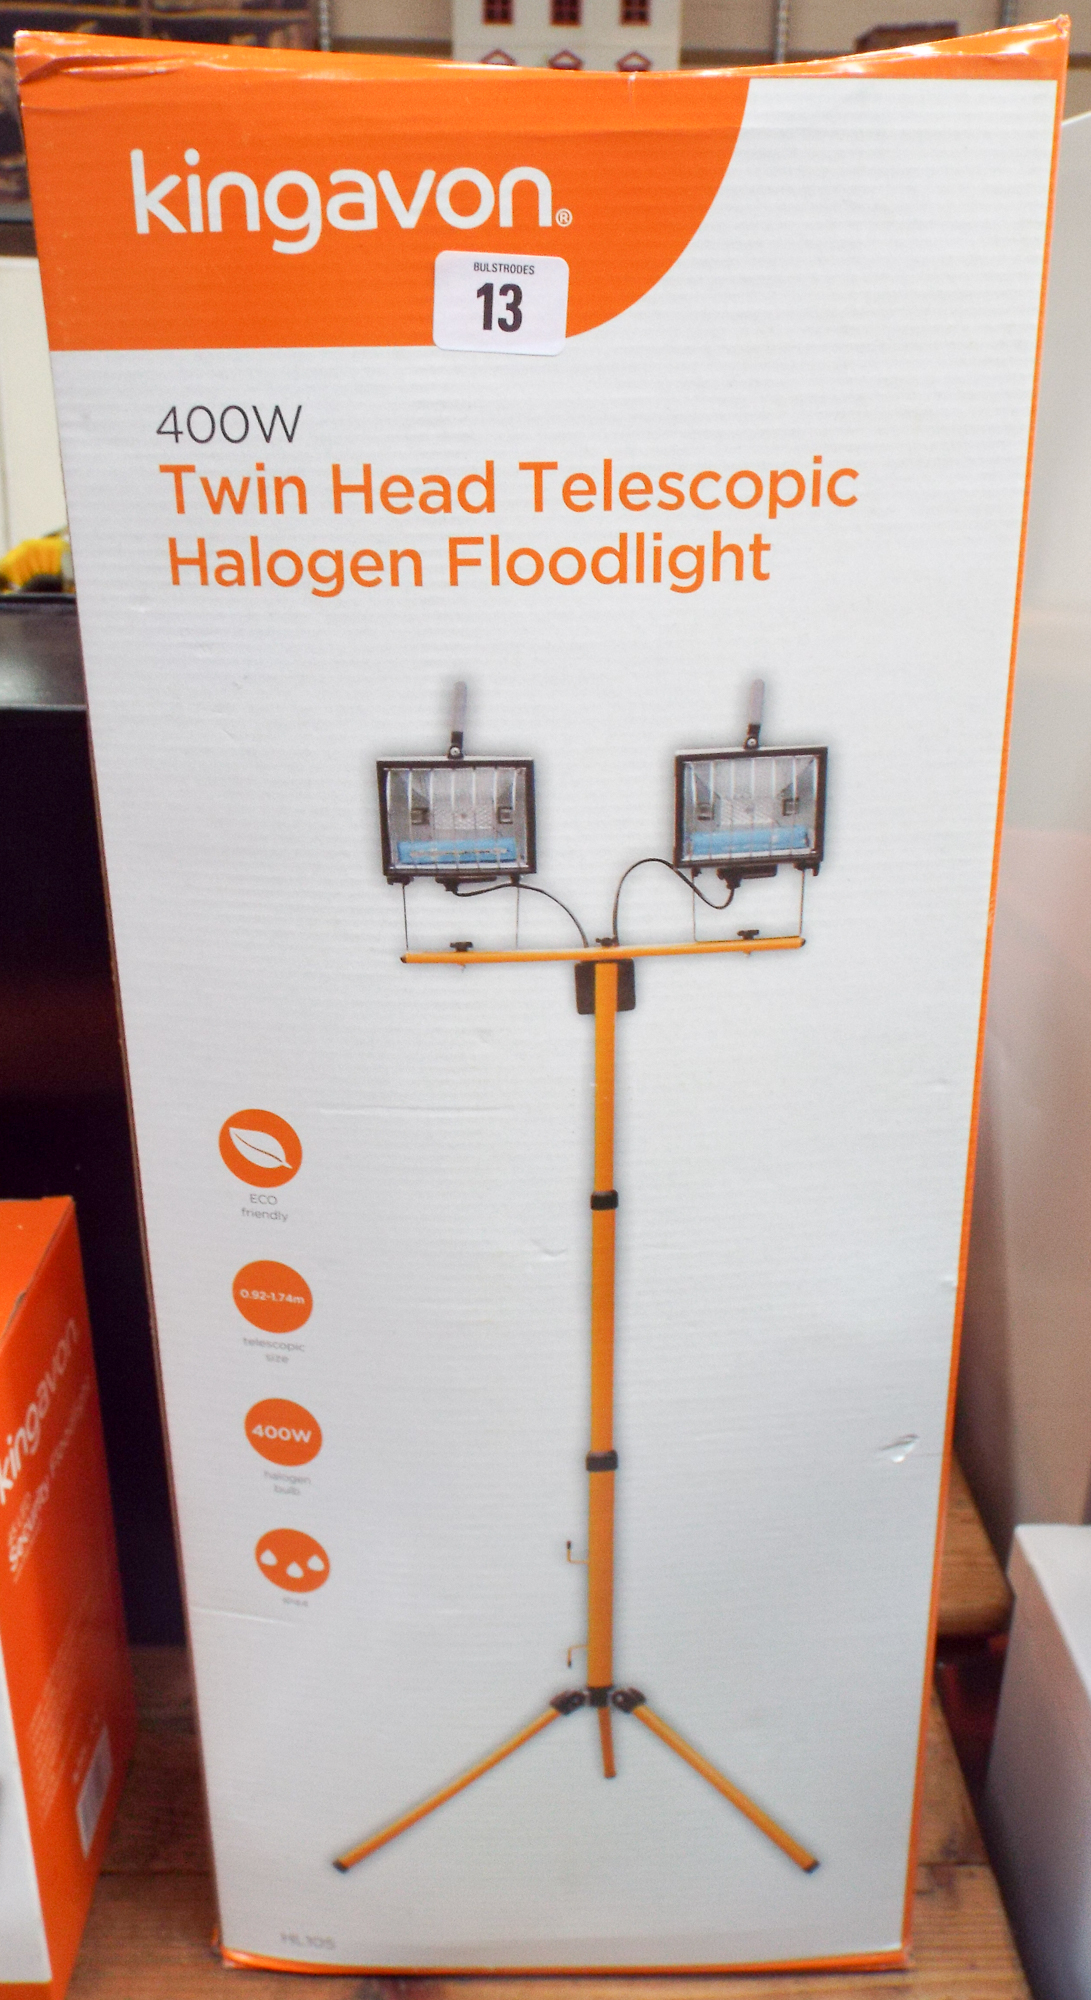 A new 400watt twin head telescopic halogen flood light